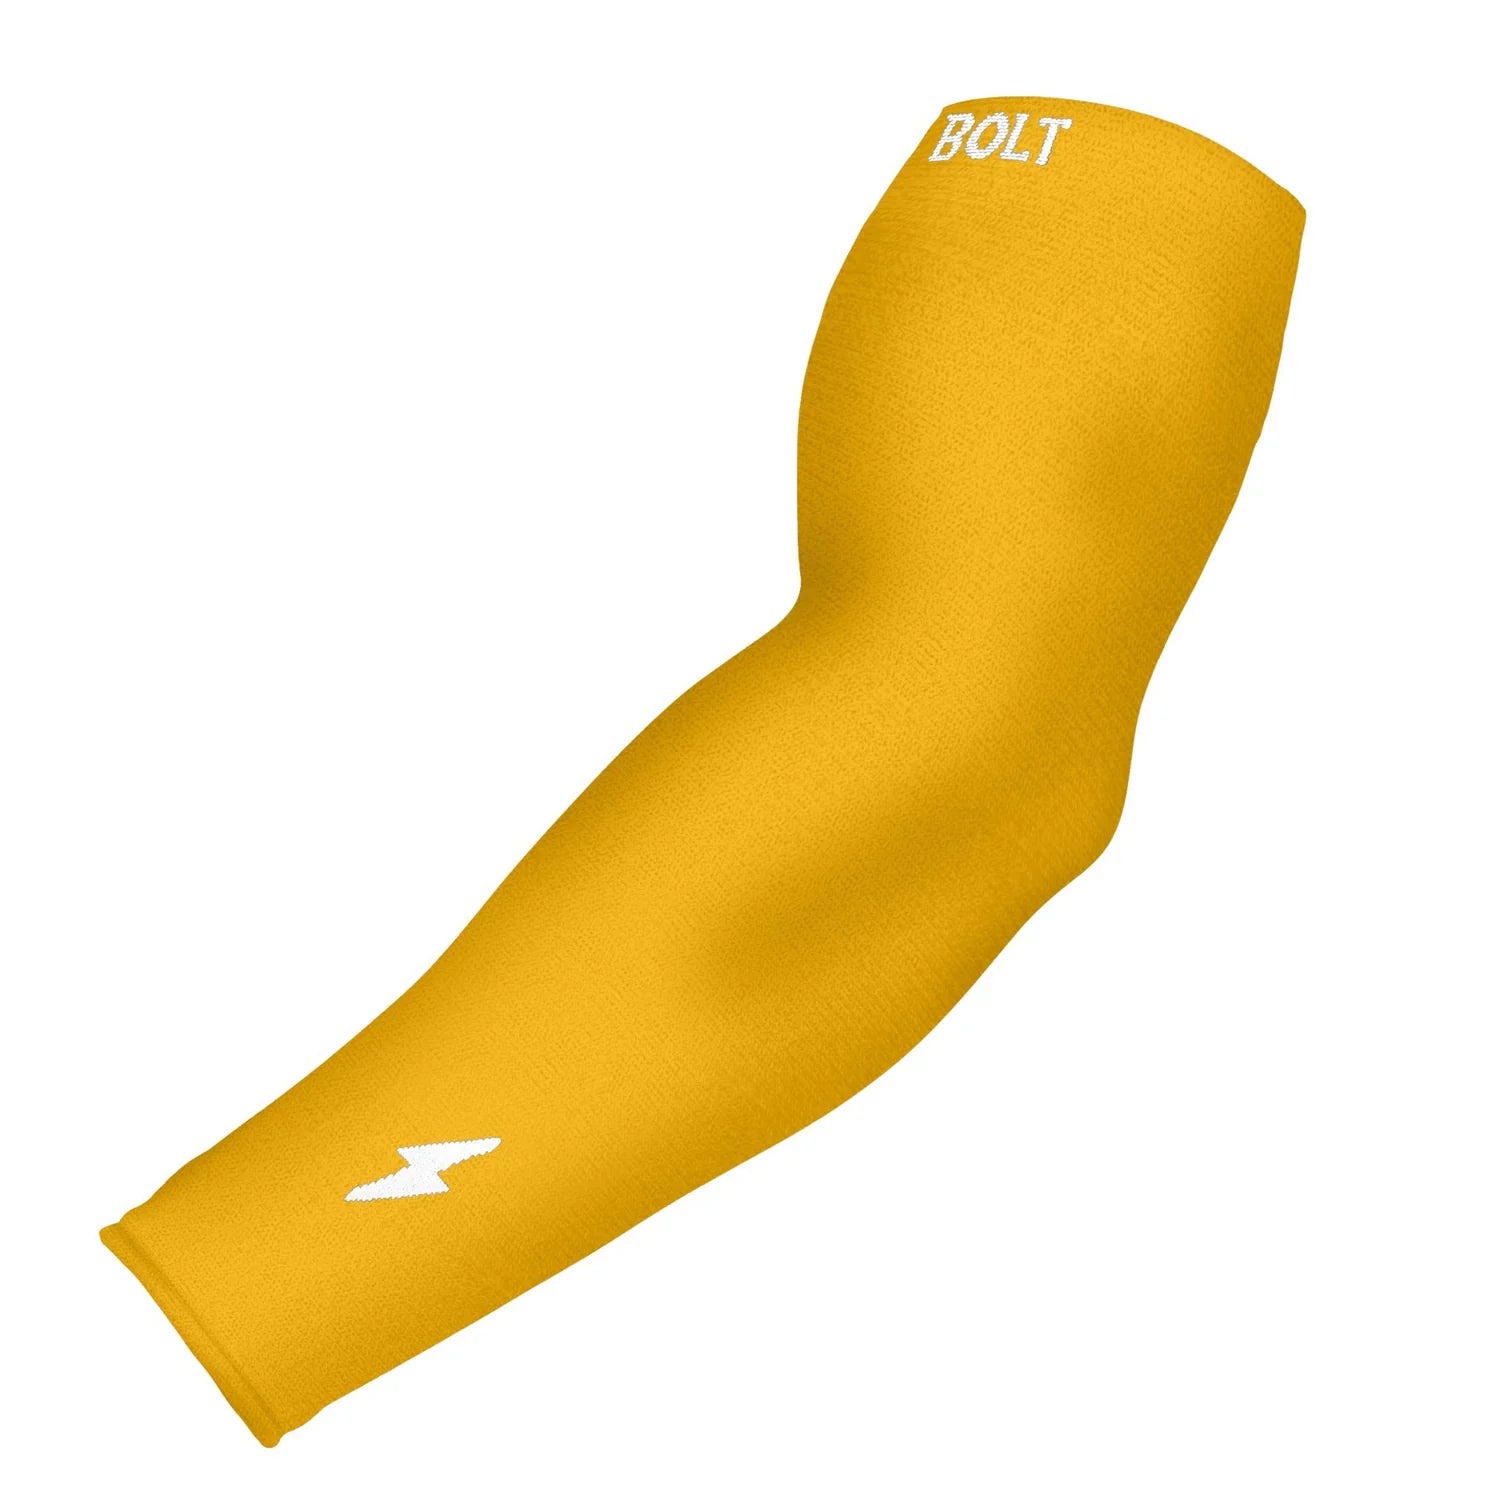 BRUCE BOLT Premium Yellow Arm Sleeve